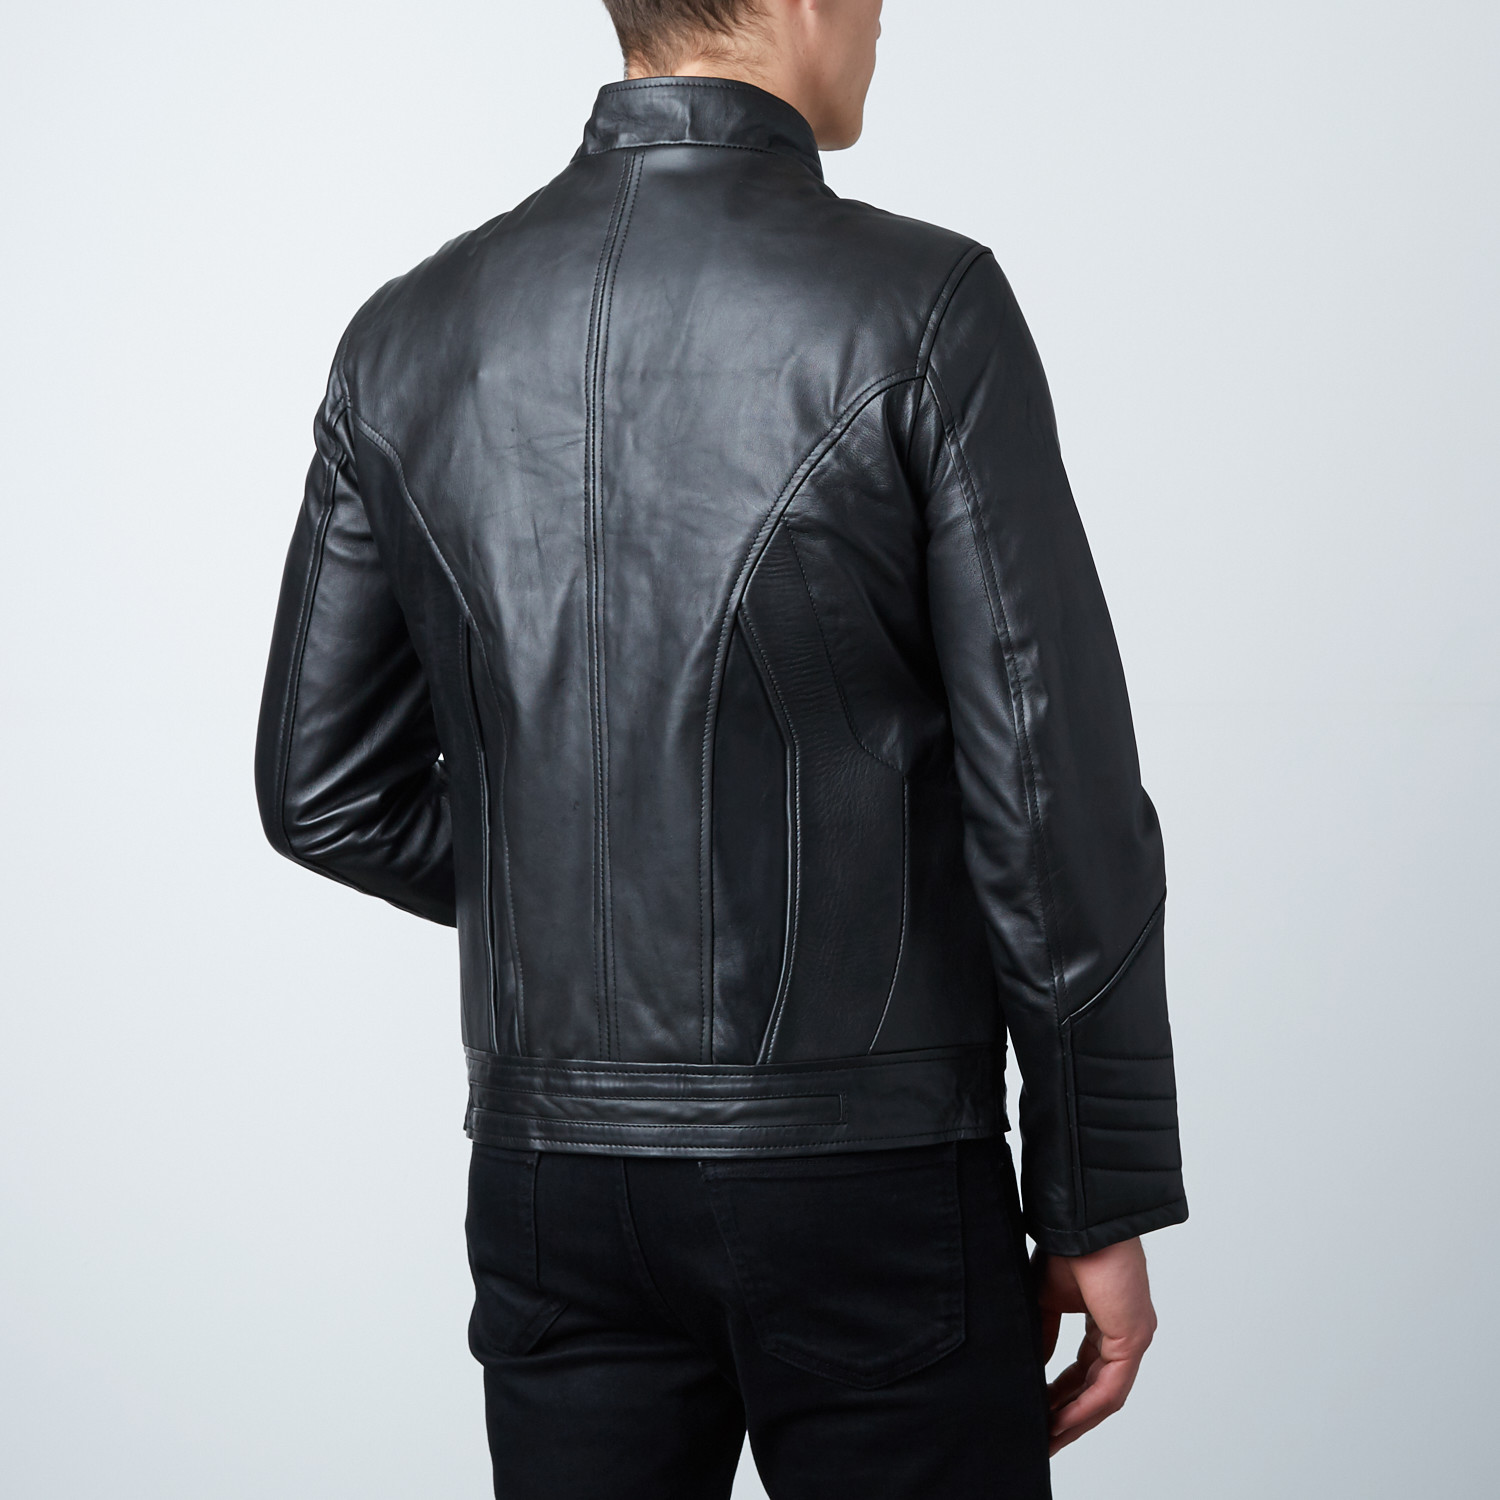 Batman Padded Motorcycle Leather Jacket // Black (XS) - Luca Designs ...